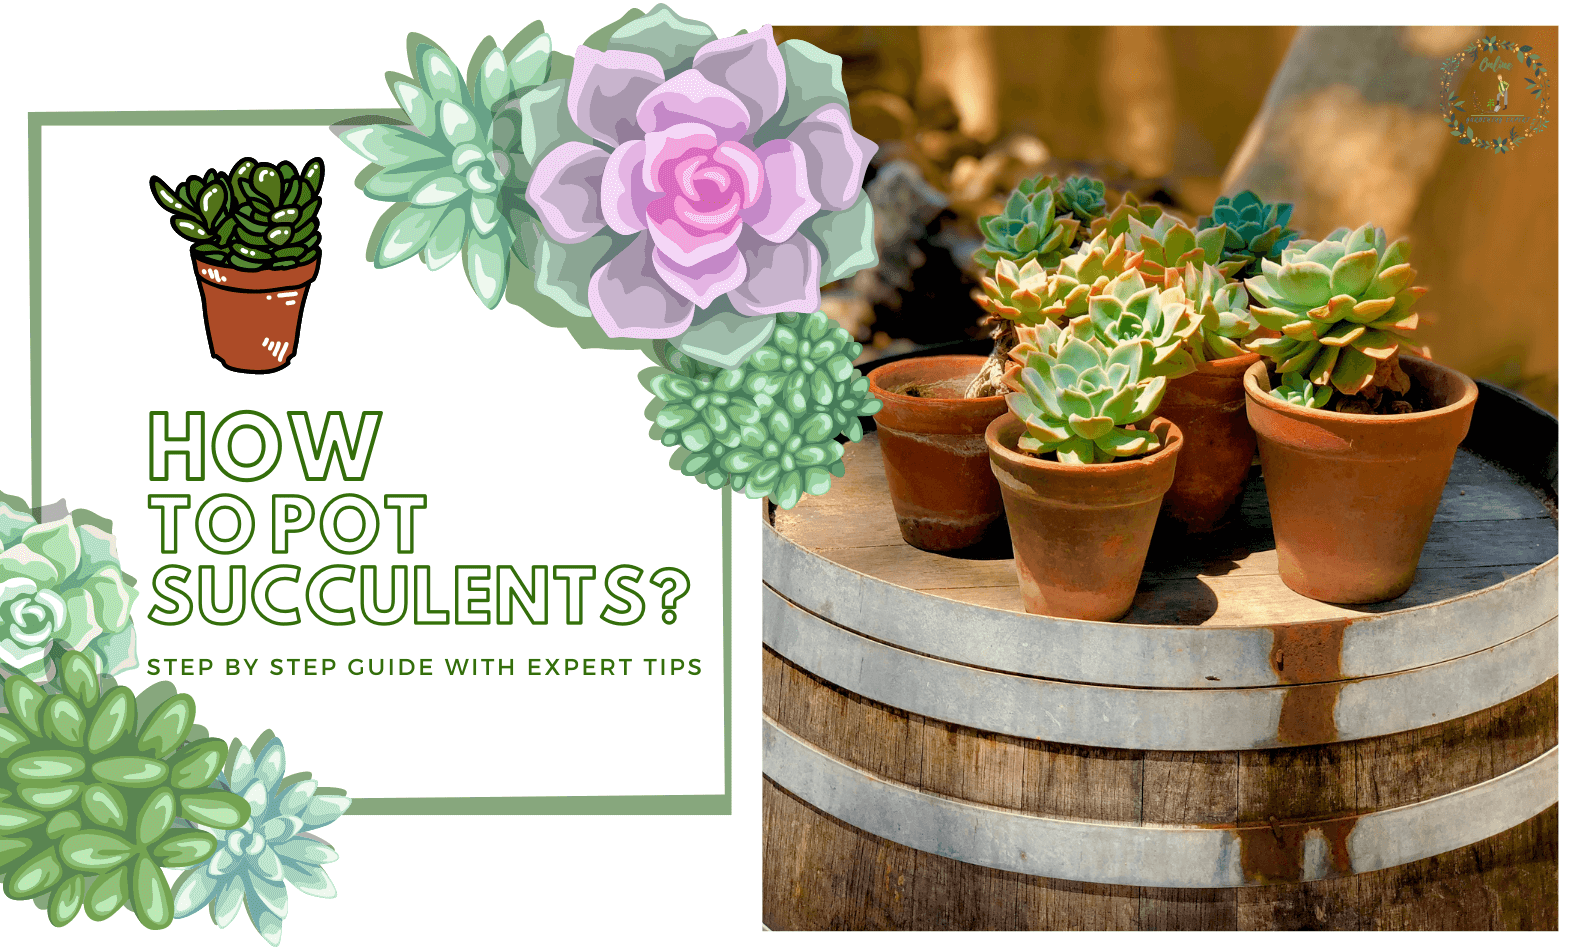 How to Pot Succulents